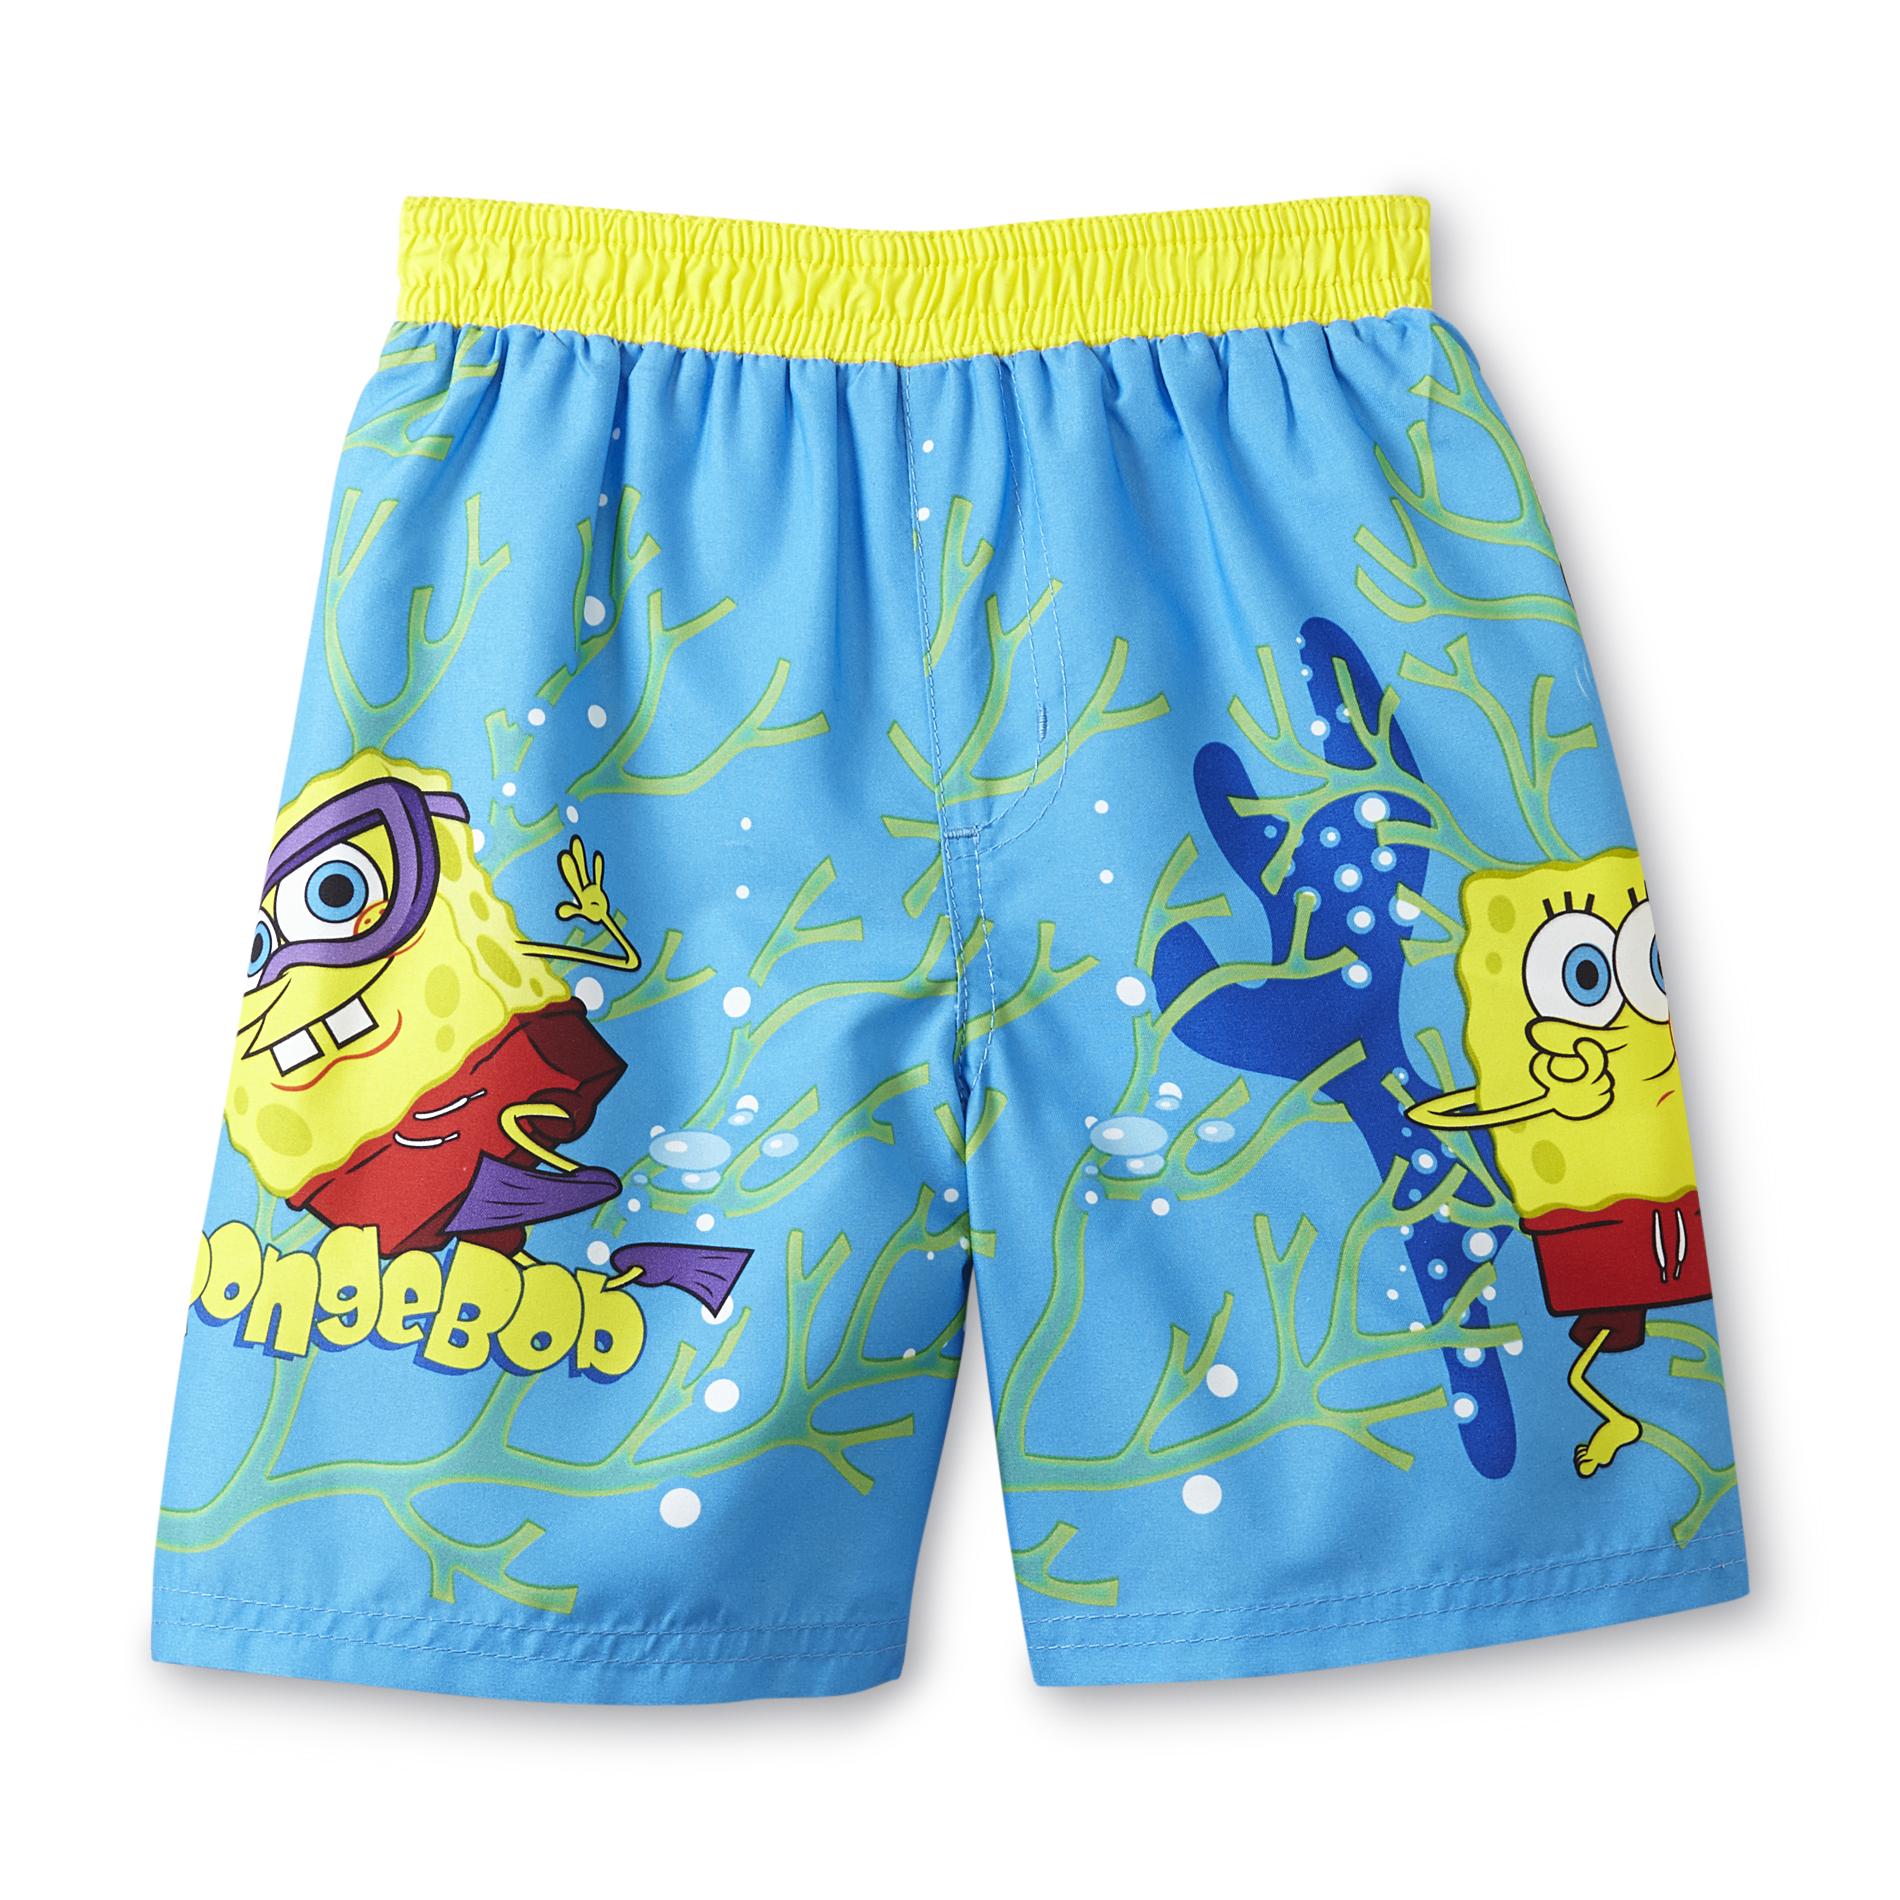 Nickelodeon SpongeBob SquarePants Toddler Boy's Swim Trunks